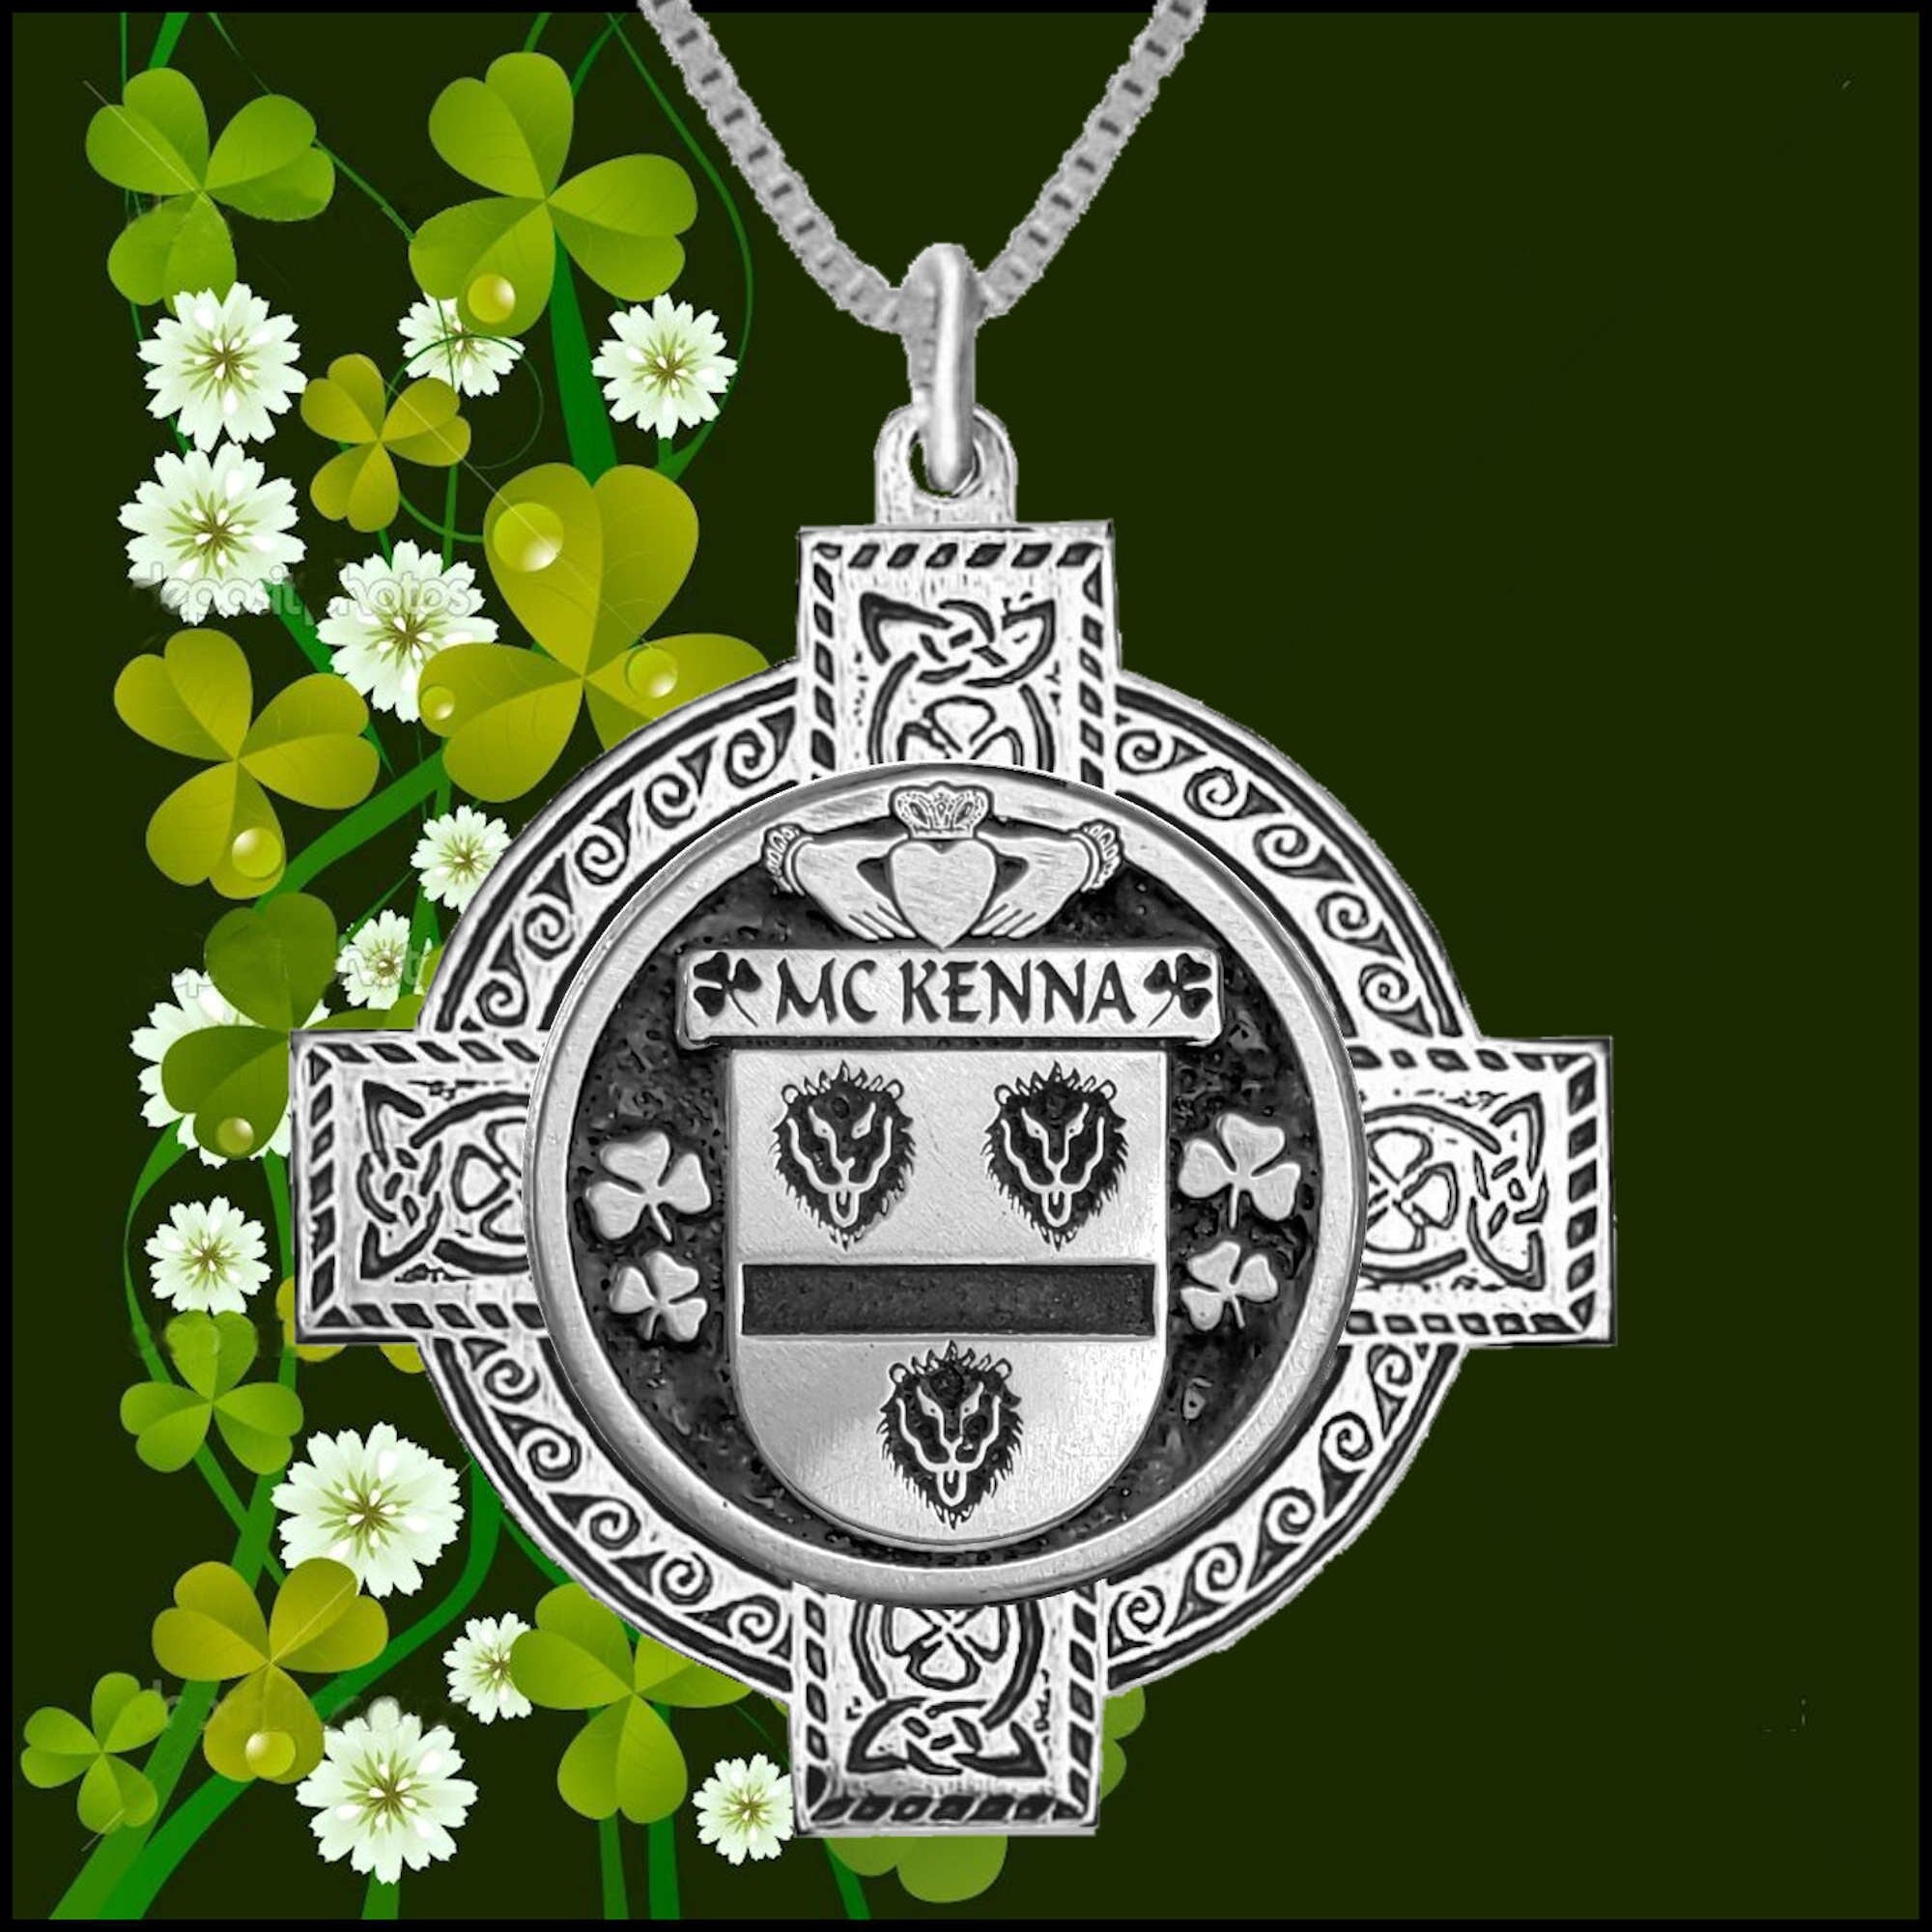 McKenna Irish Coat of Arms Celtic Cross Pendant ~ IP04